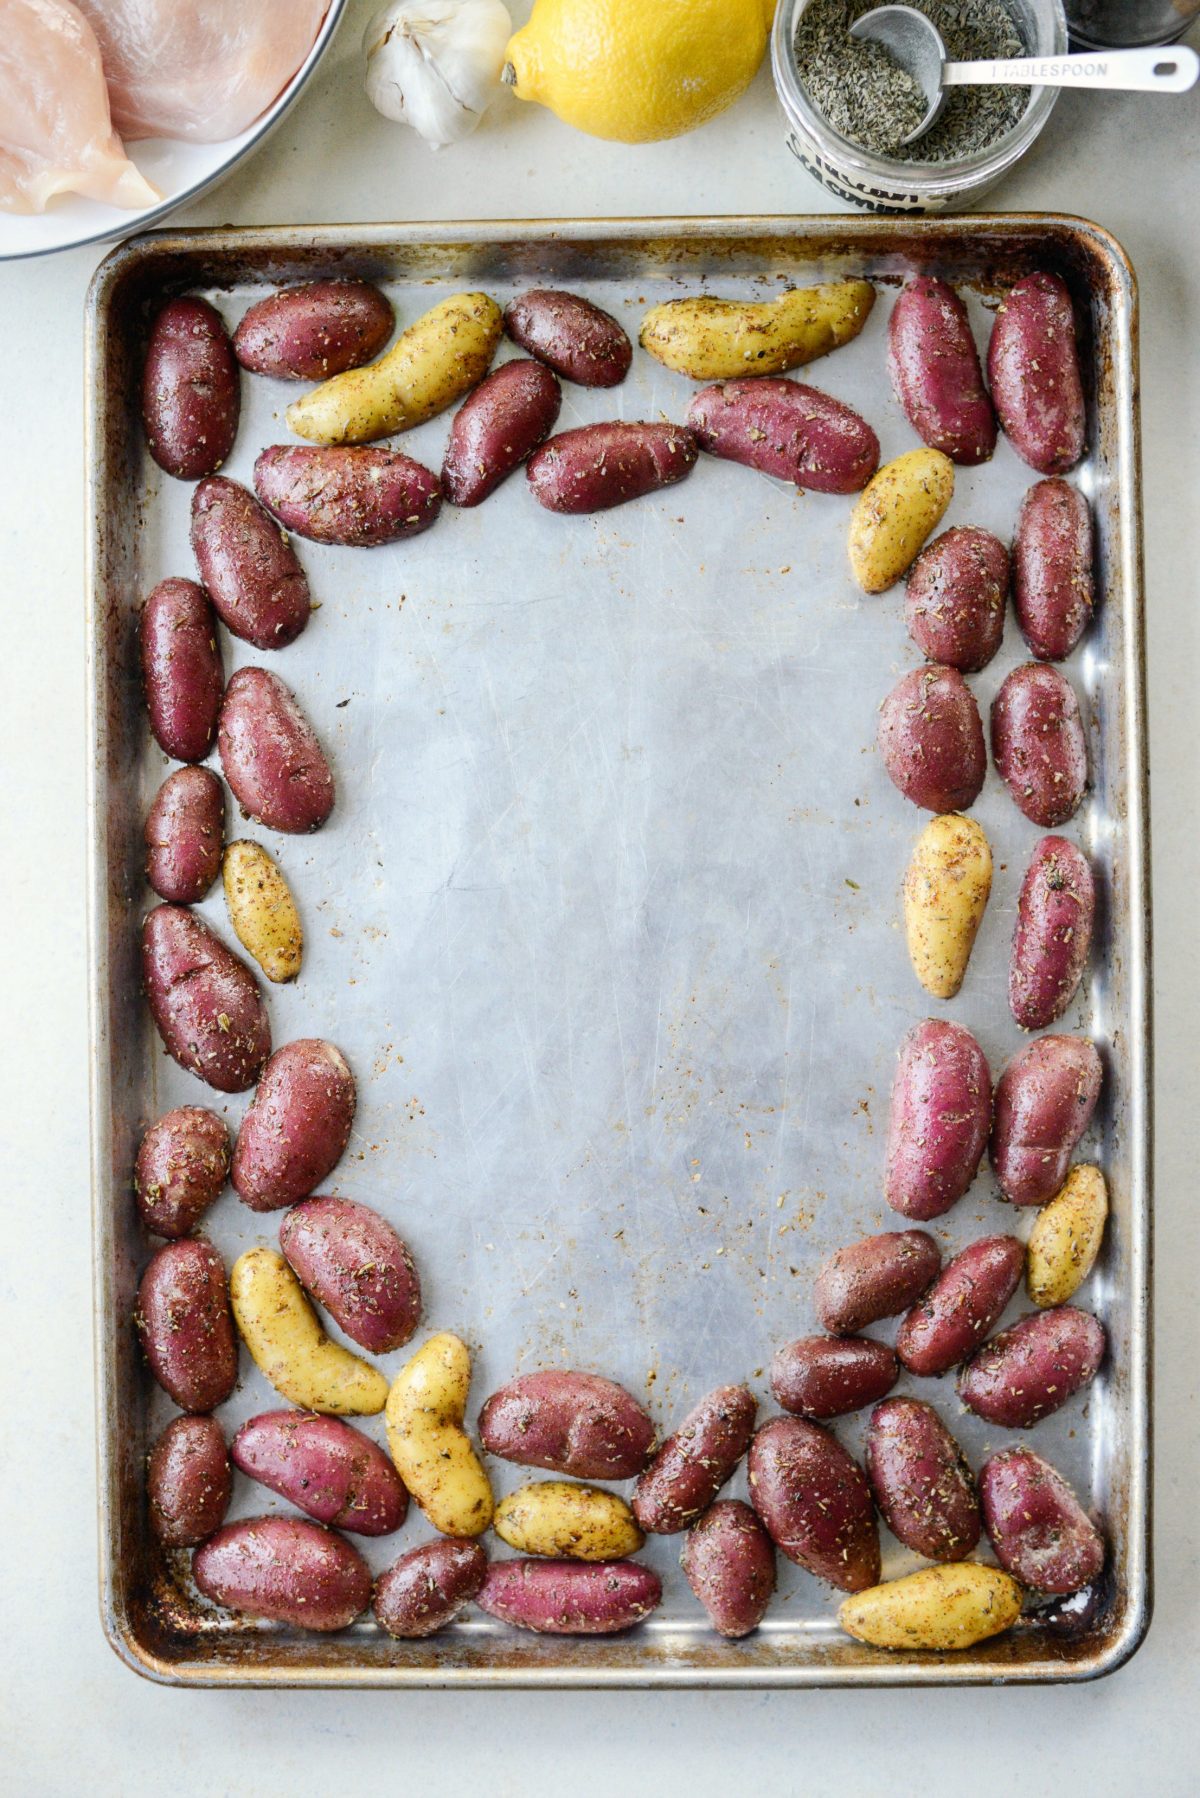 arrange potatoes around the edge of a rimmed metal baking sheet